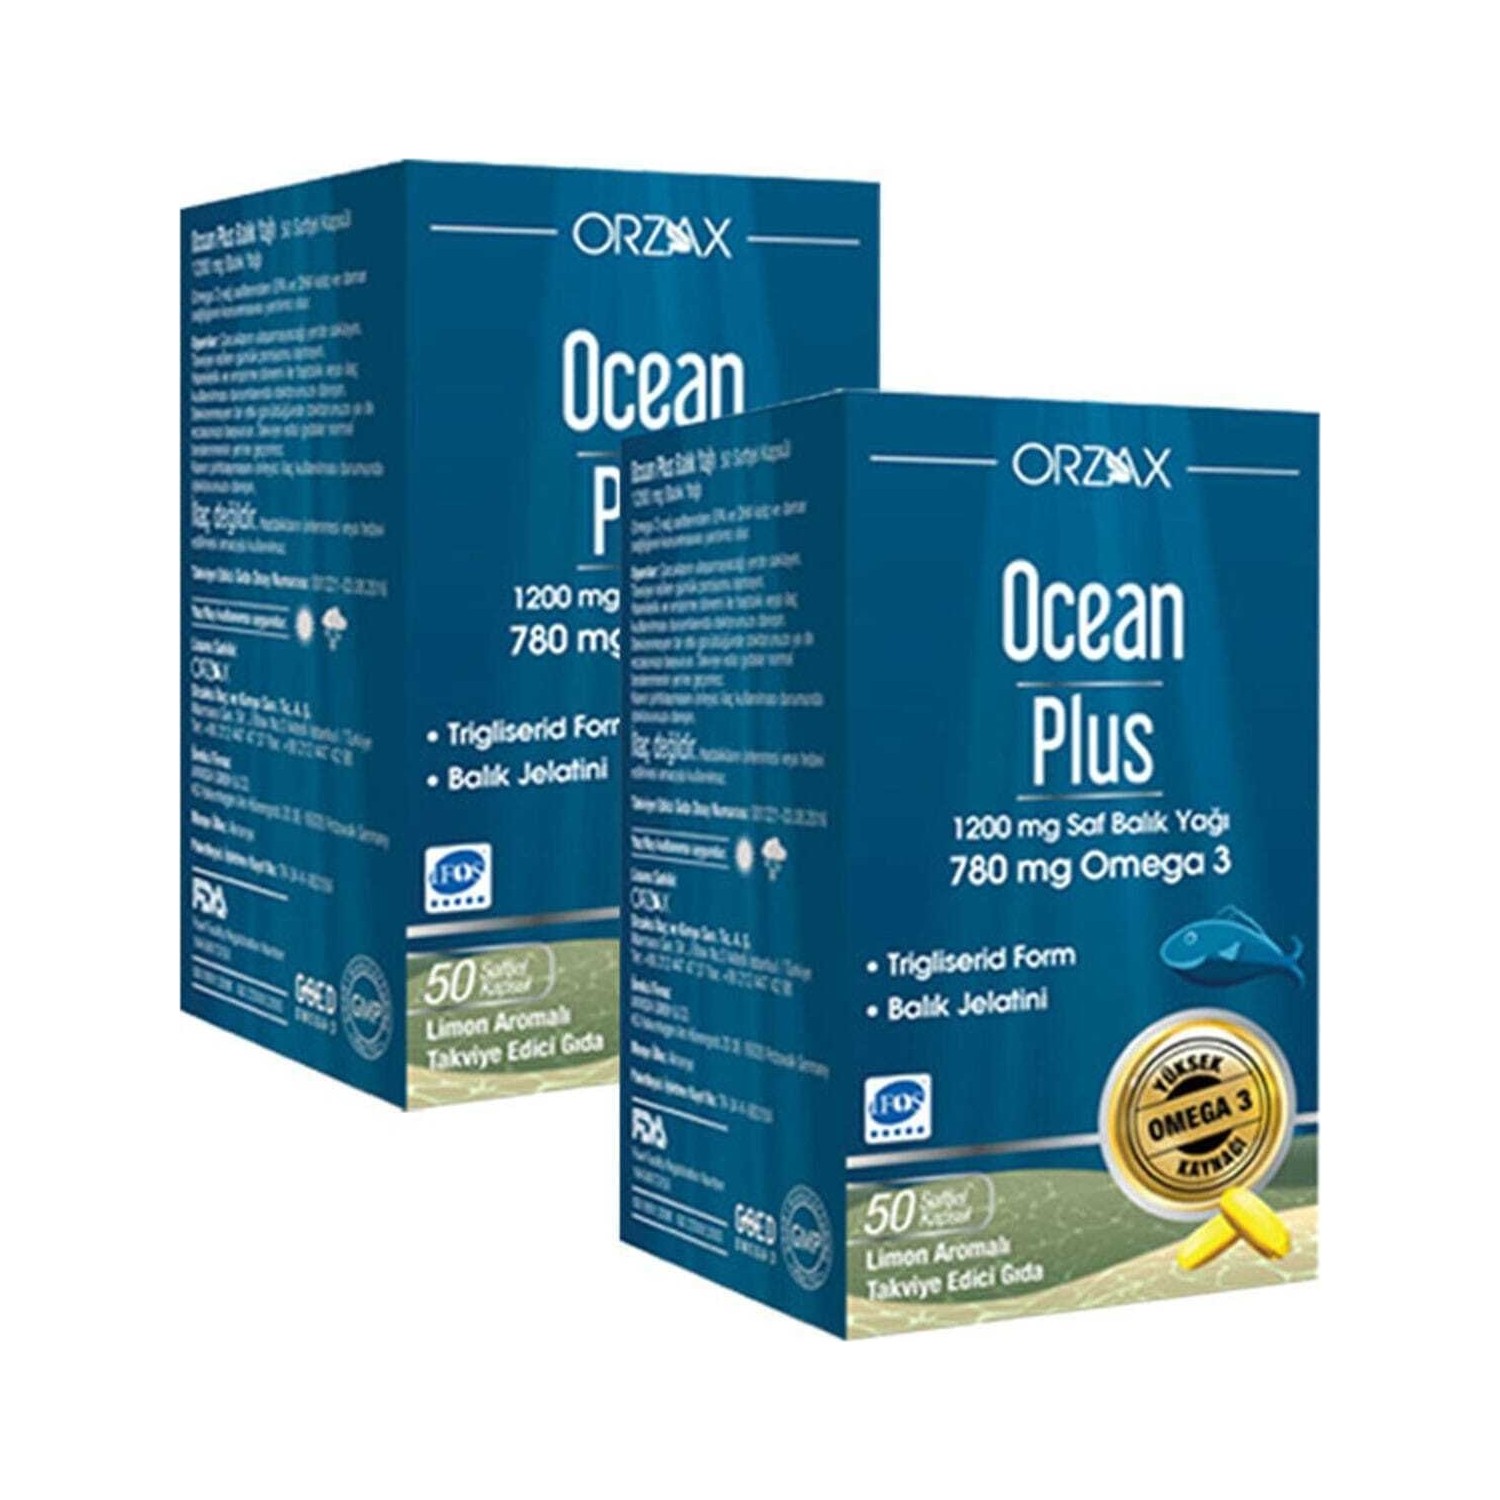 Омега-3 Plus Orzax 1200 мг, 2 упаковки по 50 капсул омега 3 plus orzax ocean 1200 мг со вкусом лимона 2 упаковки по 50 капсул